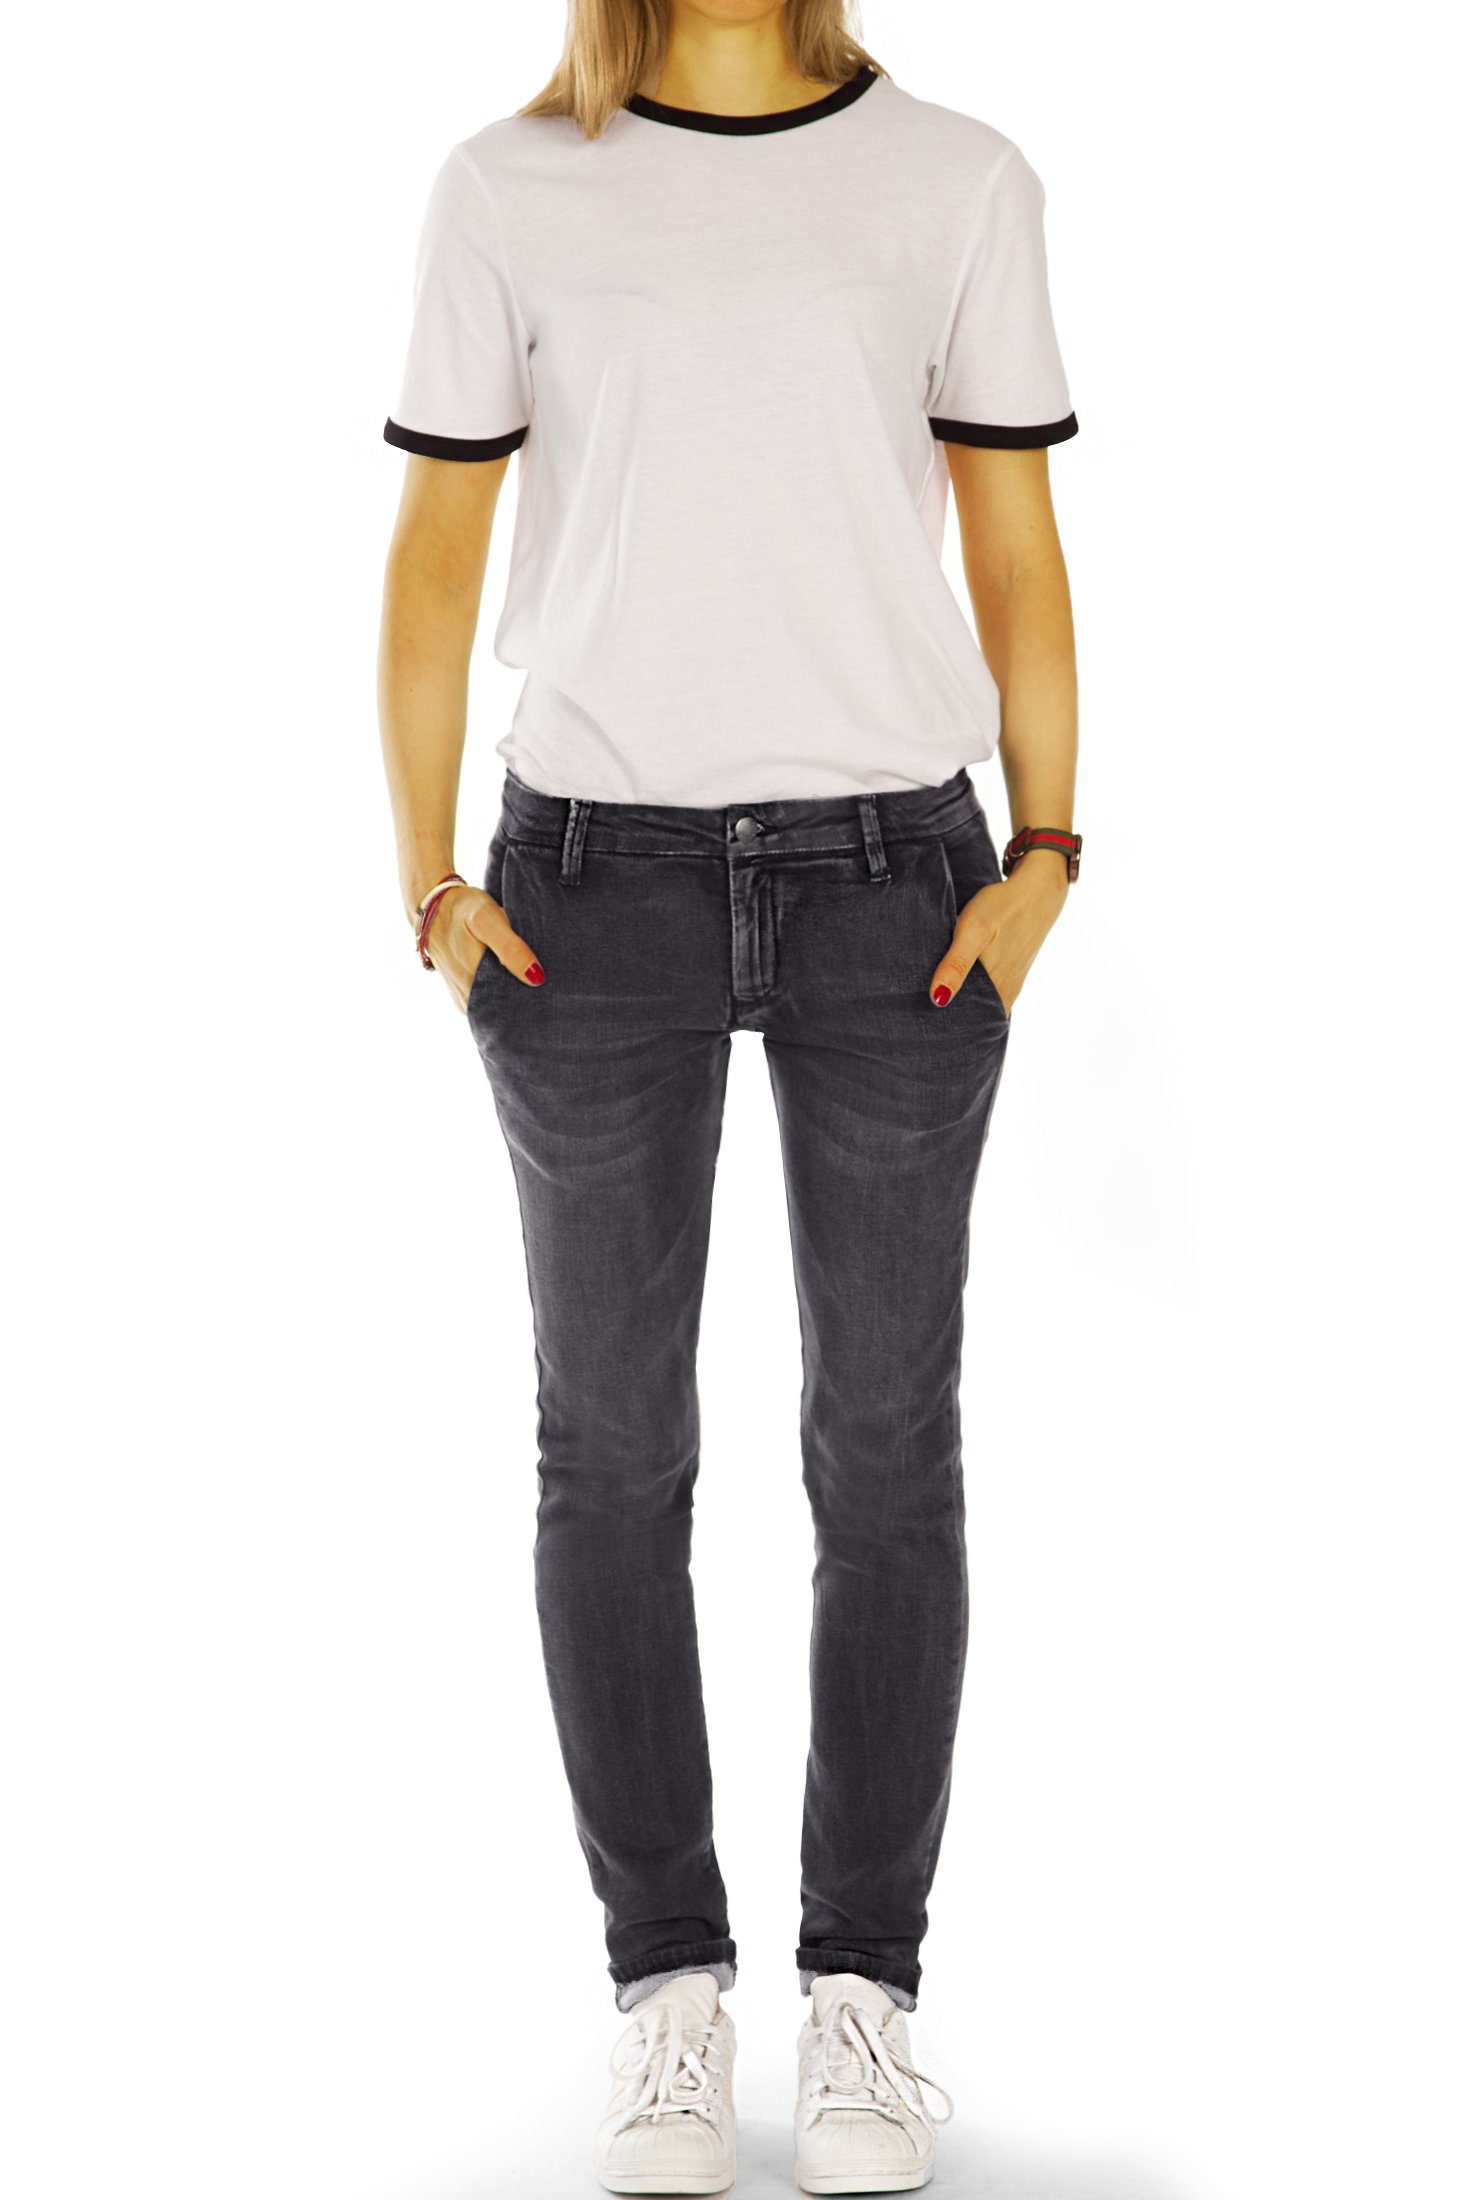 be styled Chinohose Hüftige - j10m-3 Stoffhosen Damen Chino - Hüfthosen mit grau in Hose Unifarben Stretch